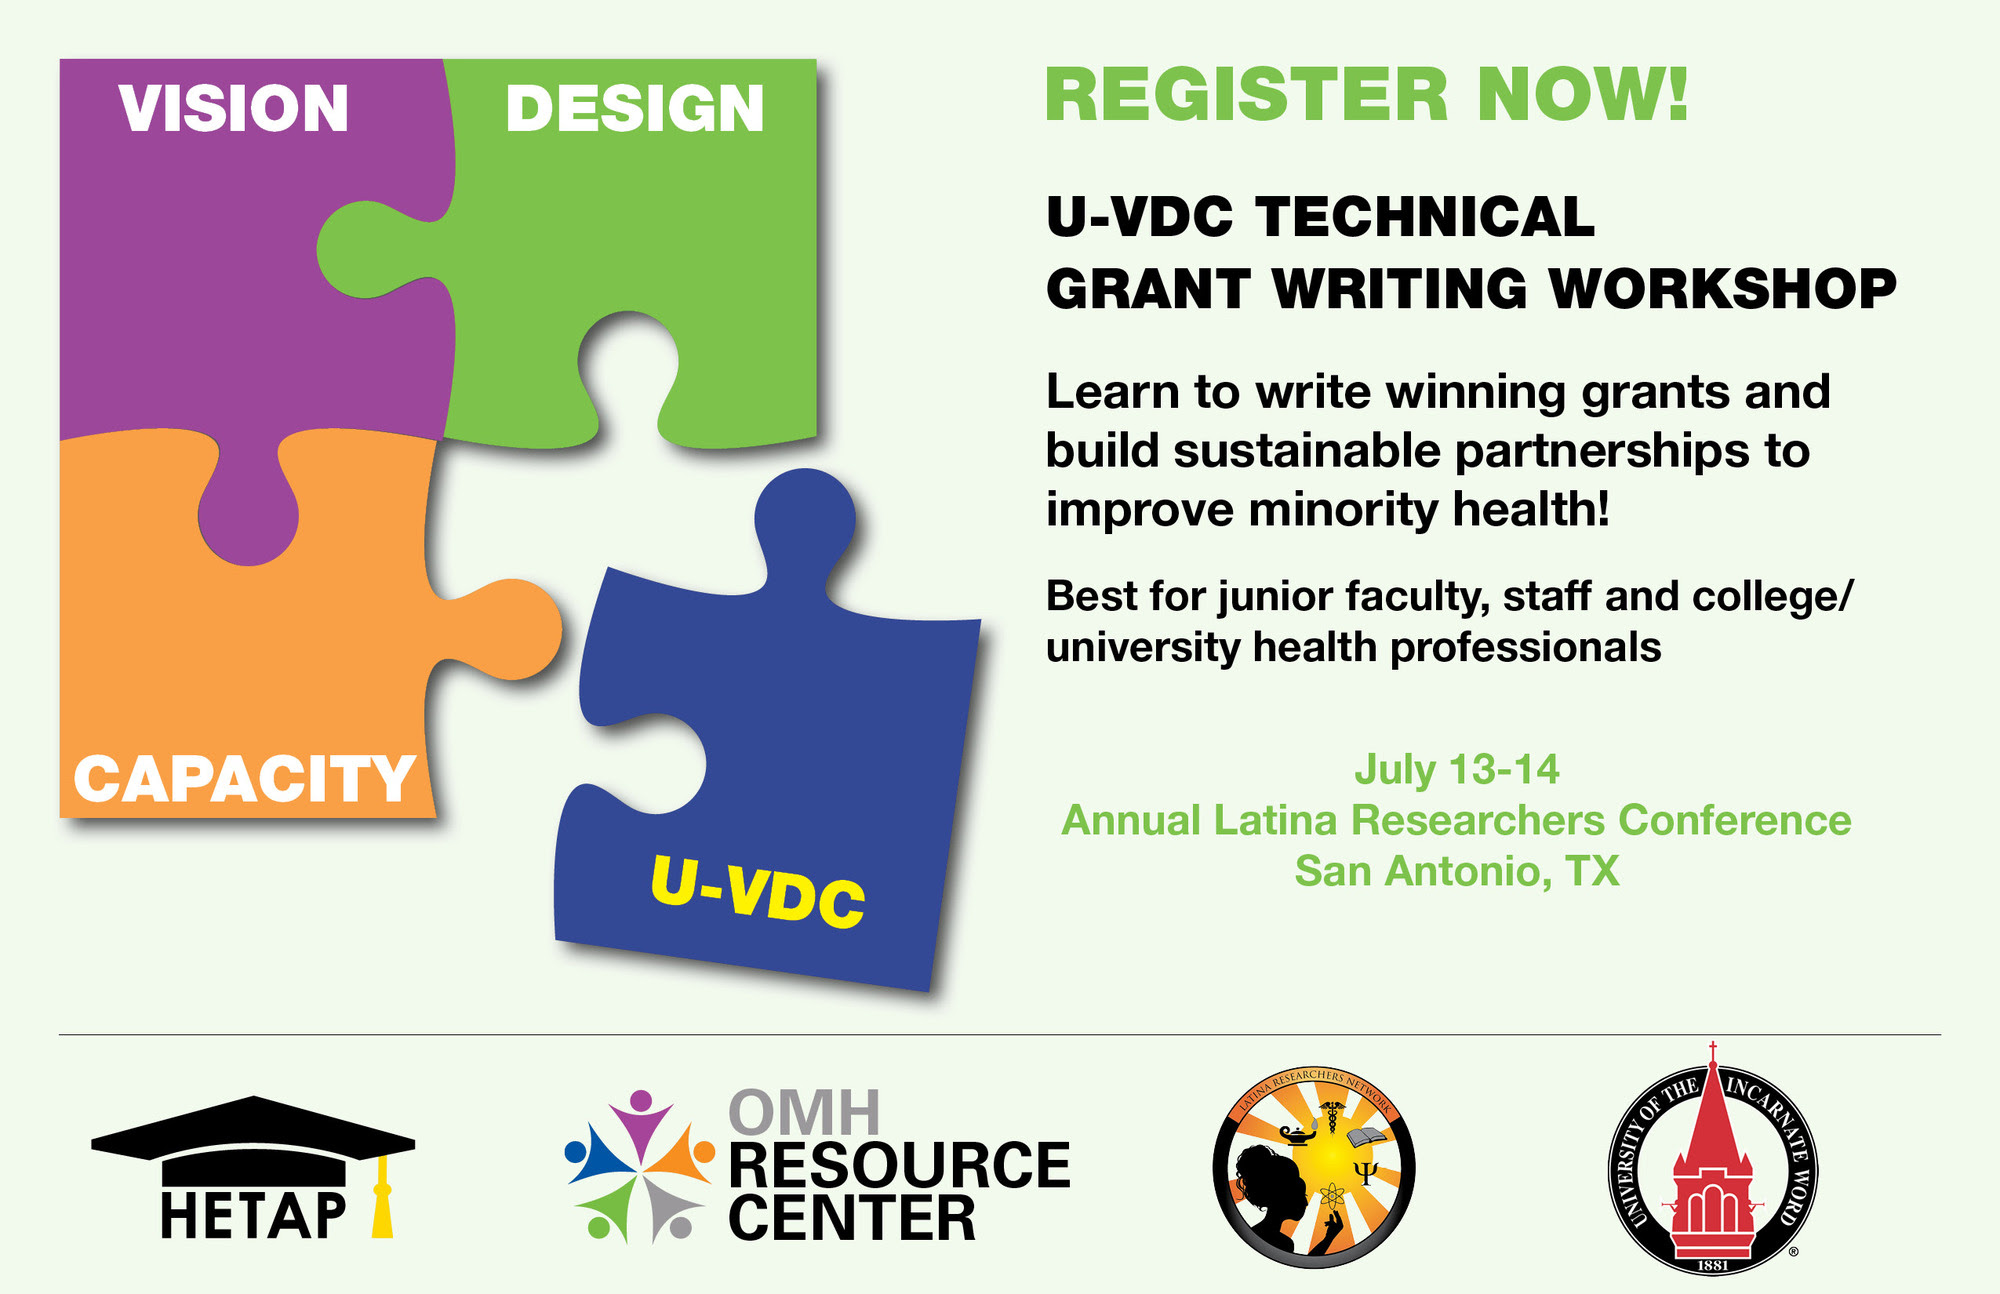 Vision Design Capacity U-VDC Grants Writing Technical Workshop July 13-14 Latina Research Network Conference San Antonio, TX